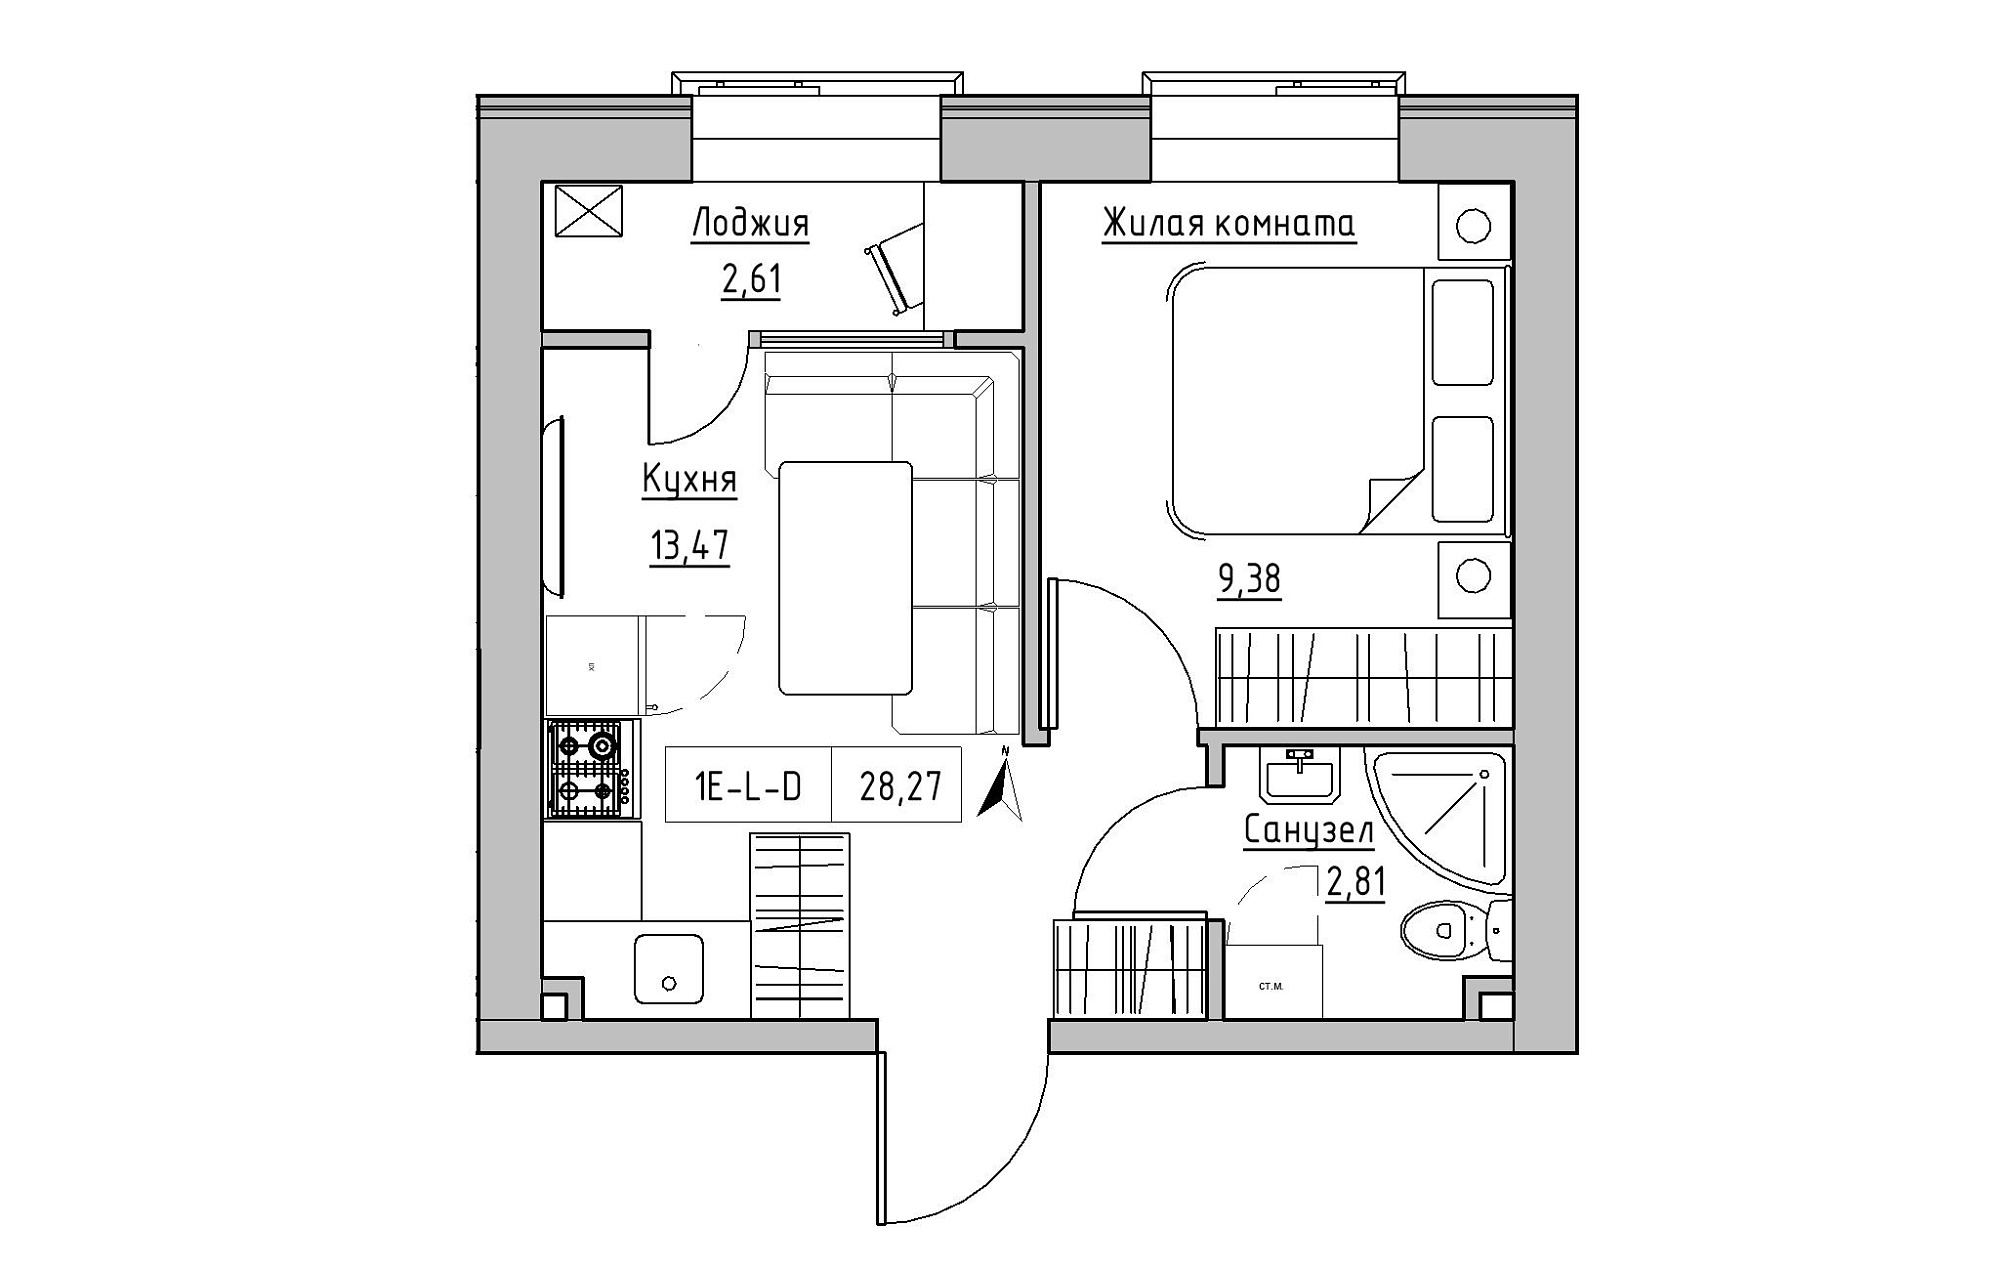 Planning 1-rm flats area 28.27m2, KS-019-01/0015.